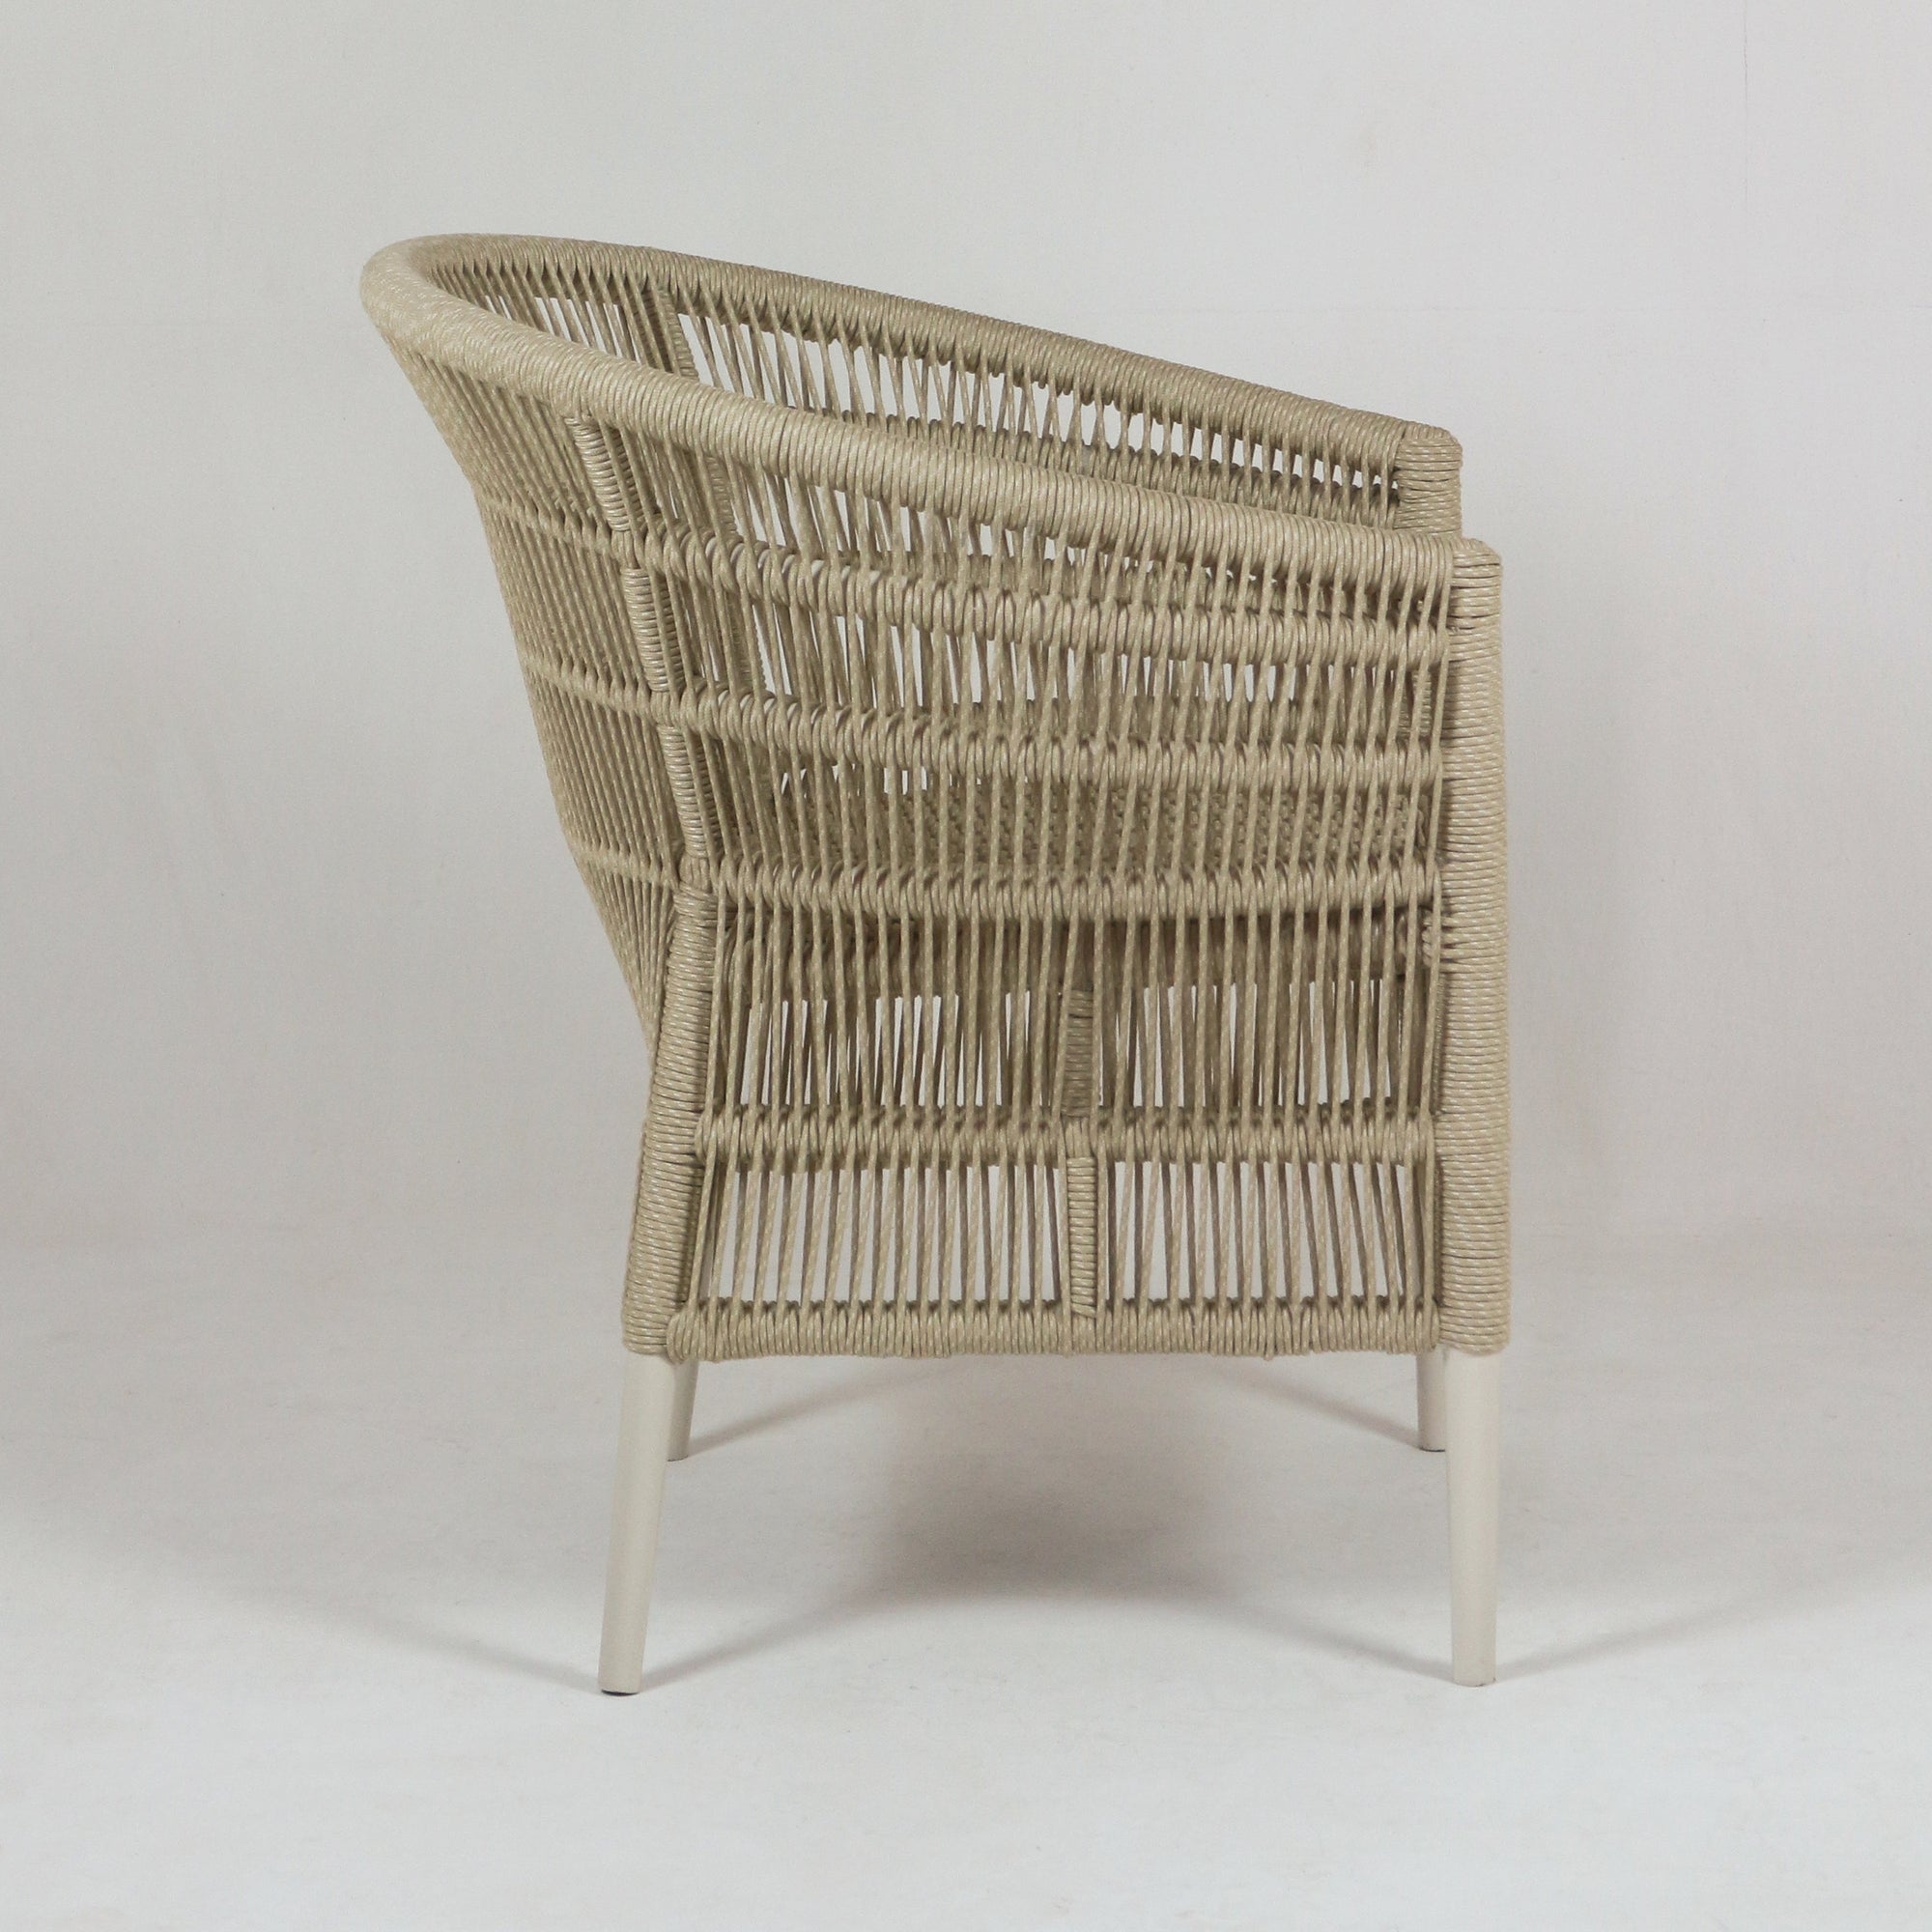 Flora Patio Chair with Sunbrella Fabric - INTERIORTONIC